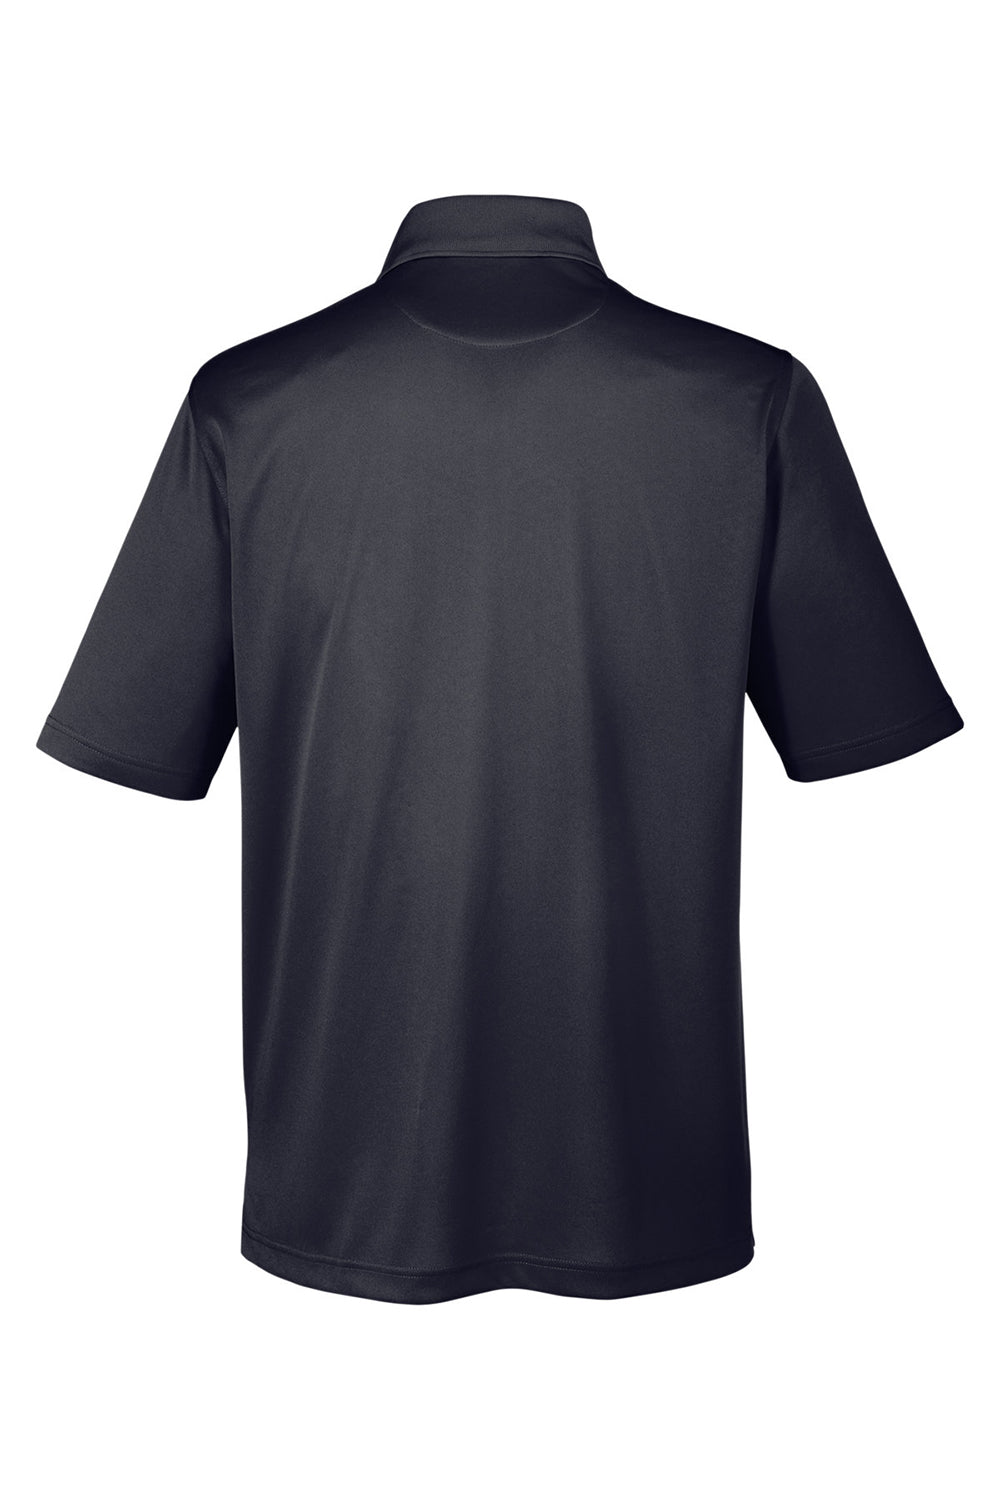 Harriton M348P Mens Advantage Performance Moisture Wicking Short Sleeve Polo Shirt w/ Pocket Black Flat Back